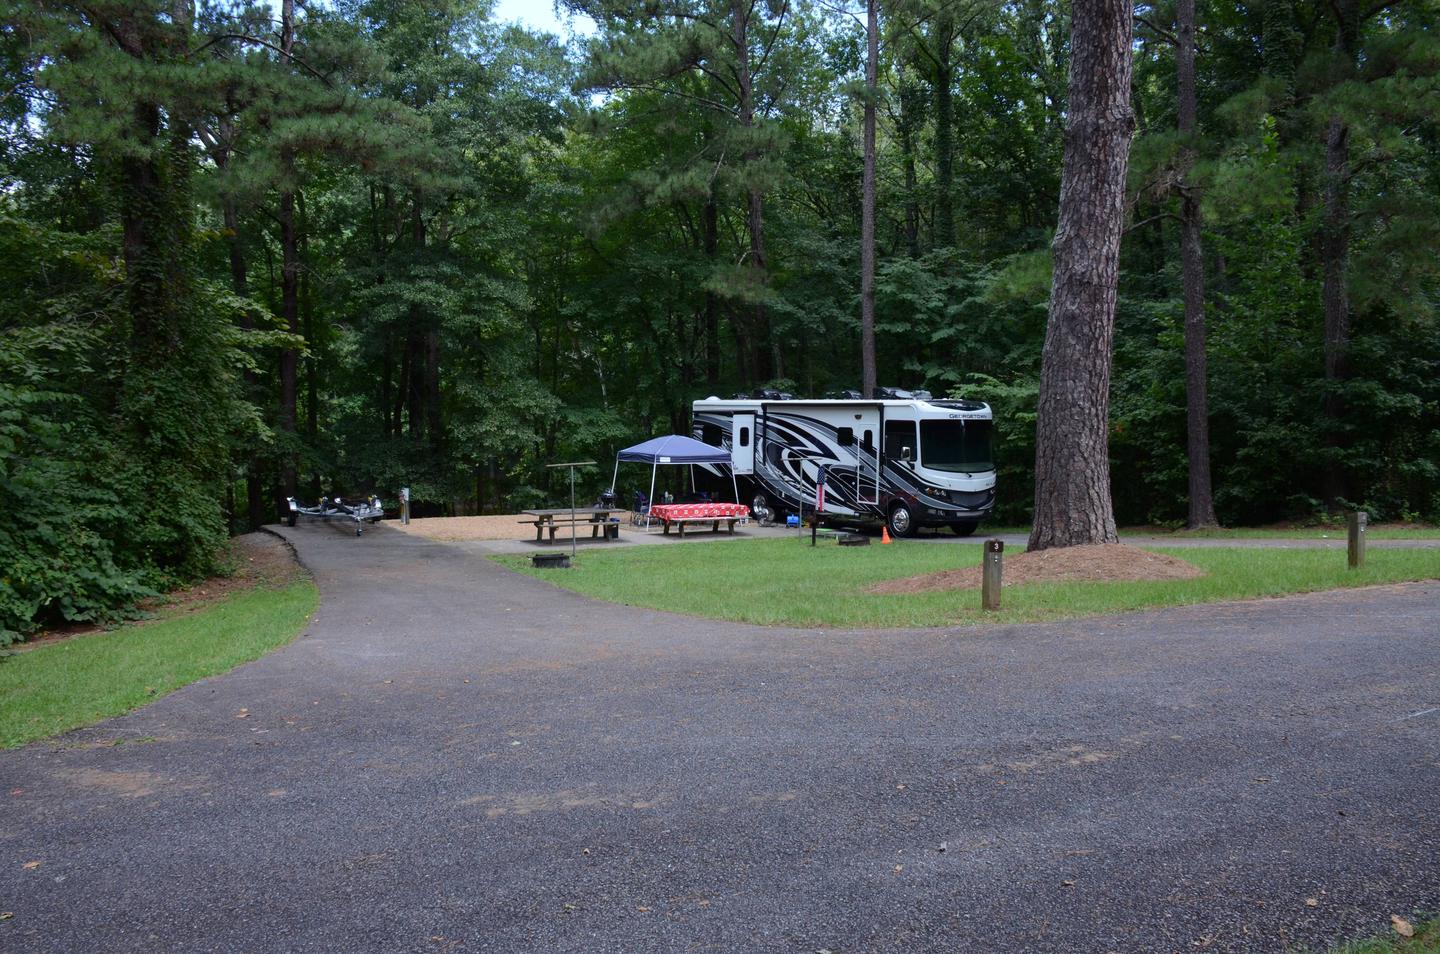 Double site, wide campsite view.Old 41 #3, campsite 003 - 004.